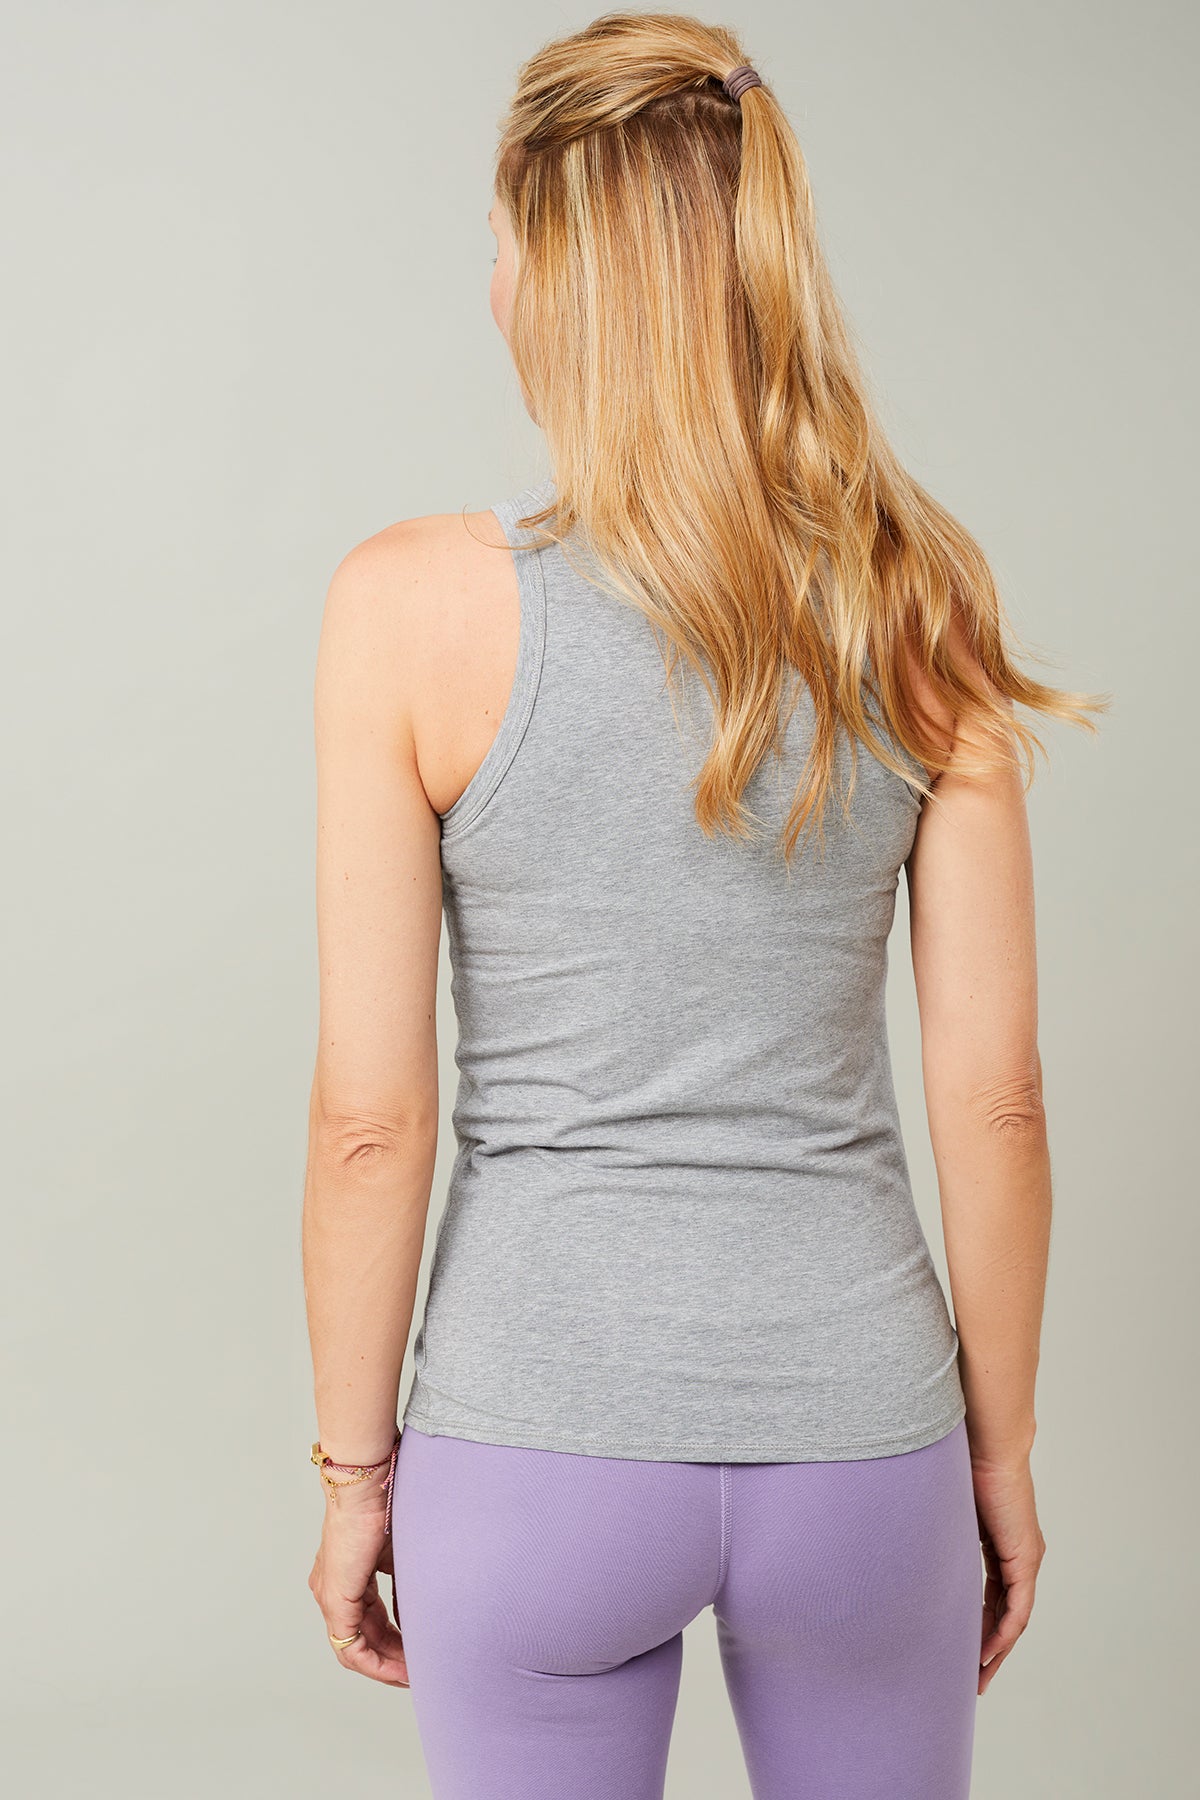 Mandala Yoga Top Grau Rückseite - Always Fit Top